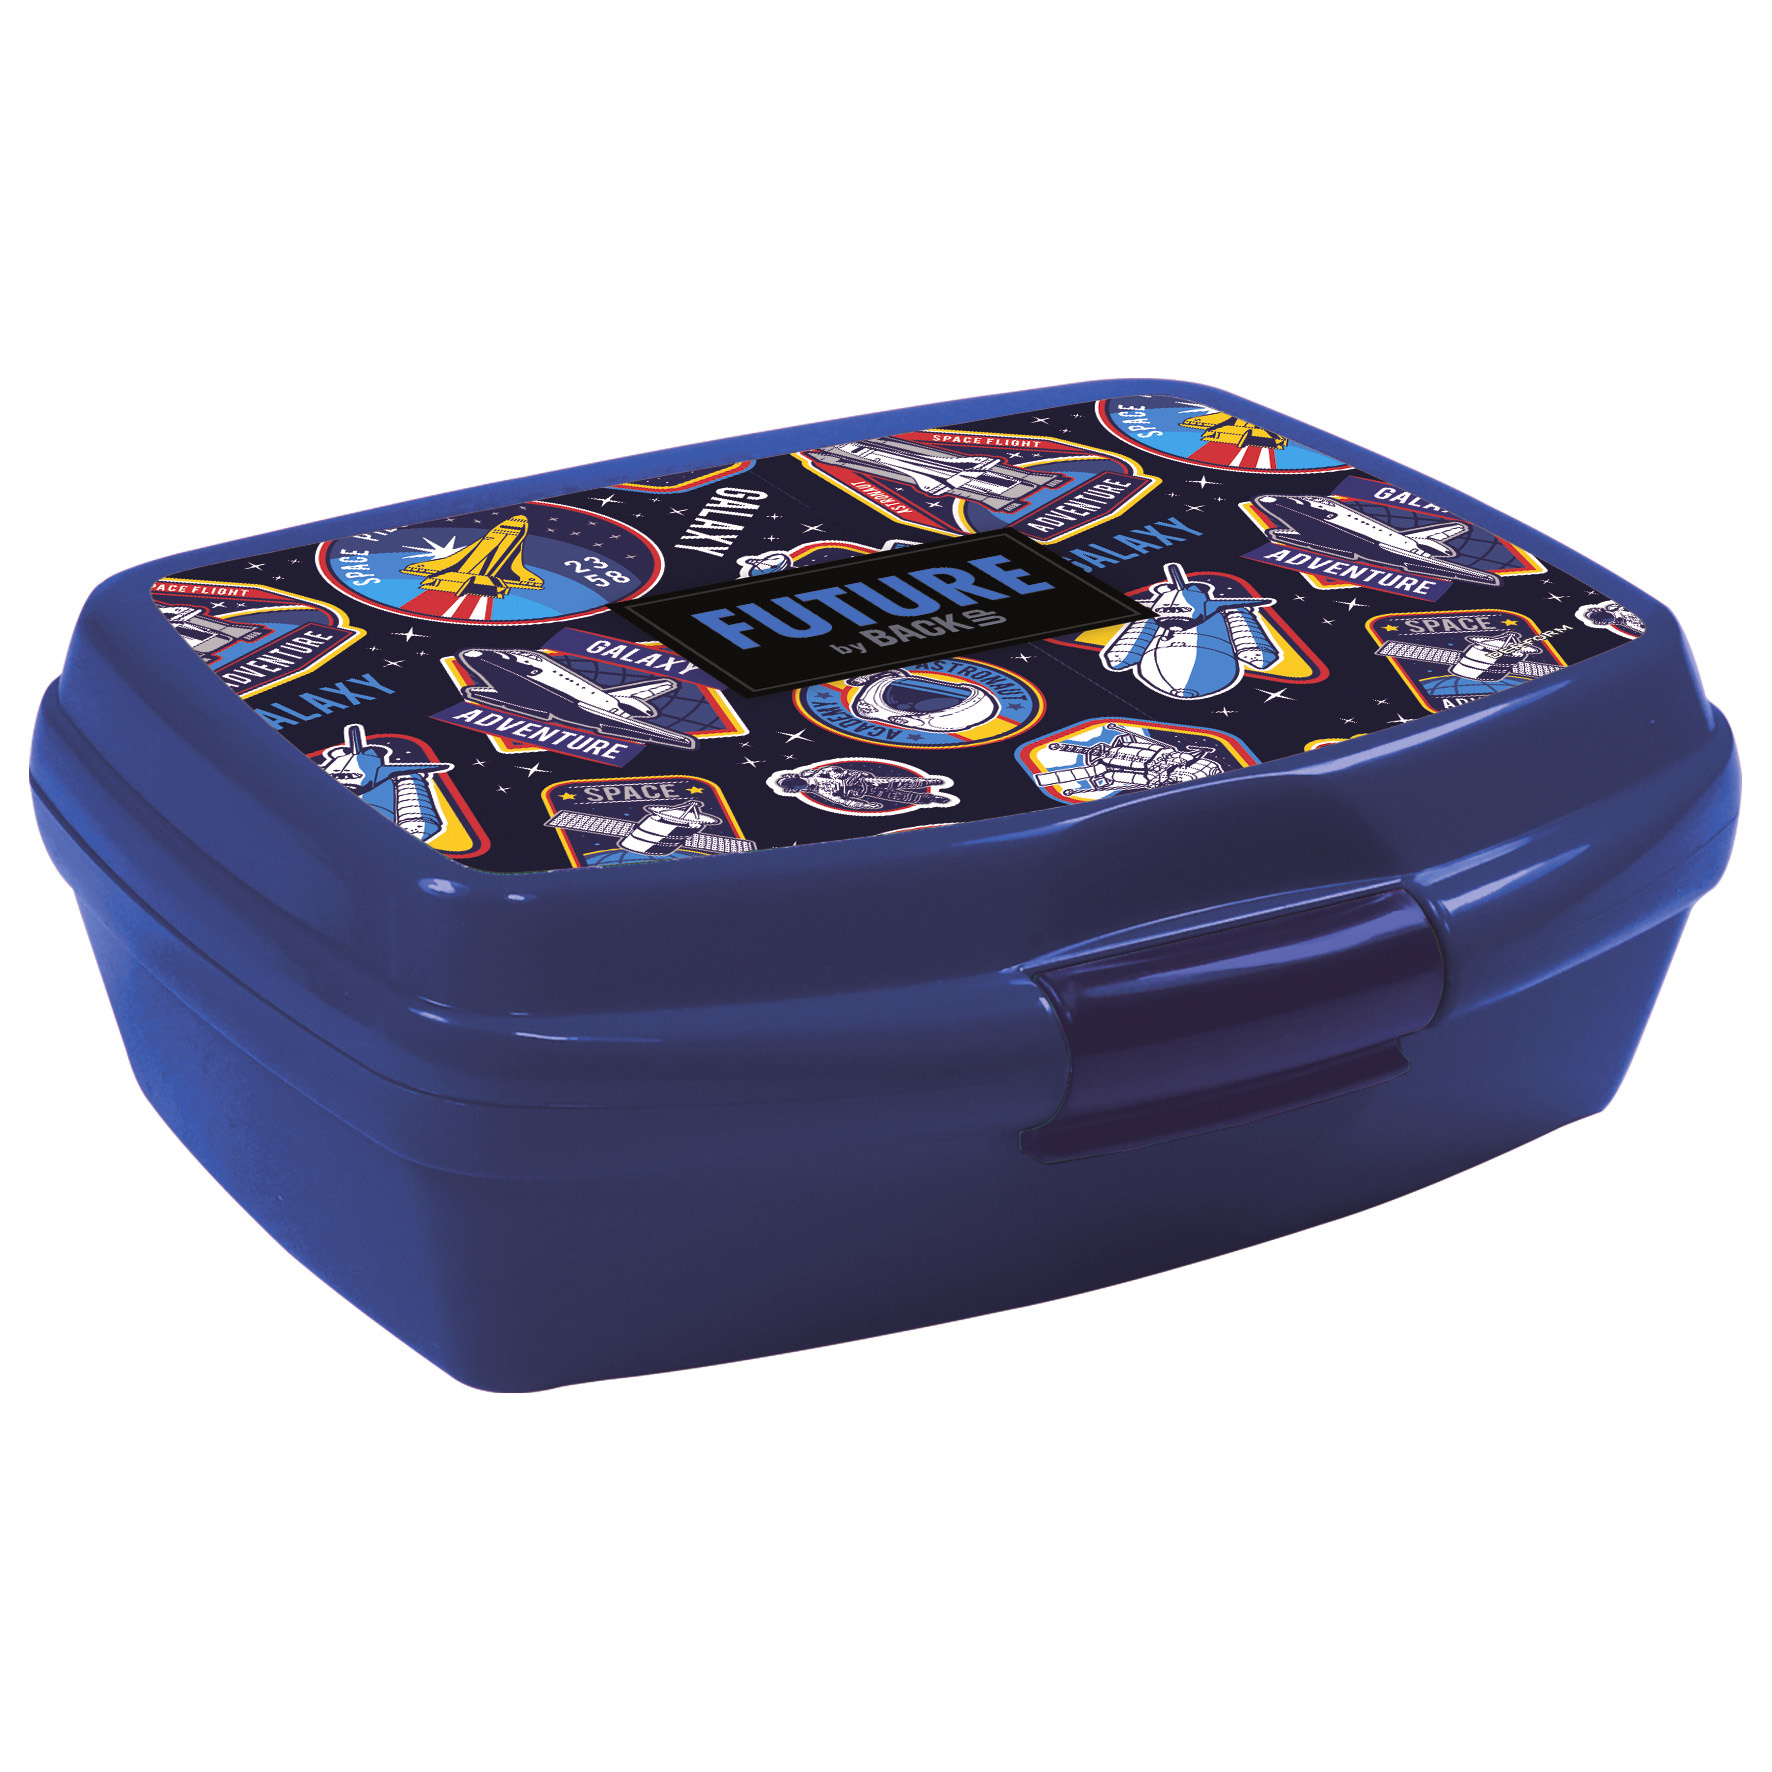 BackUP Lunch box Galaxy - 16 x 11 x 6 cm - Polypropylene